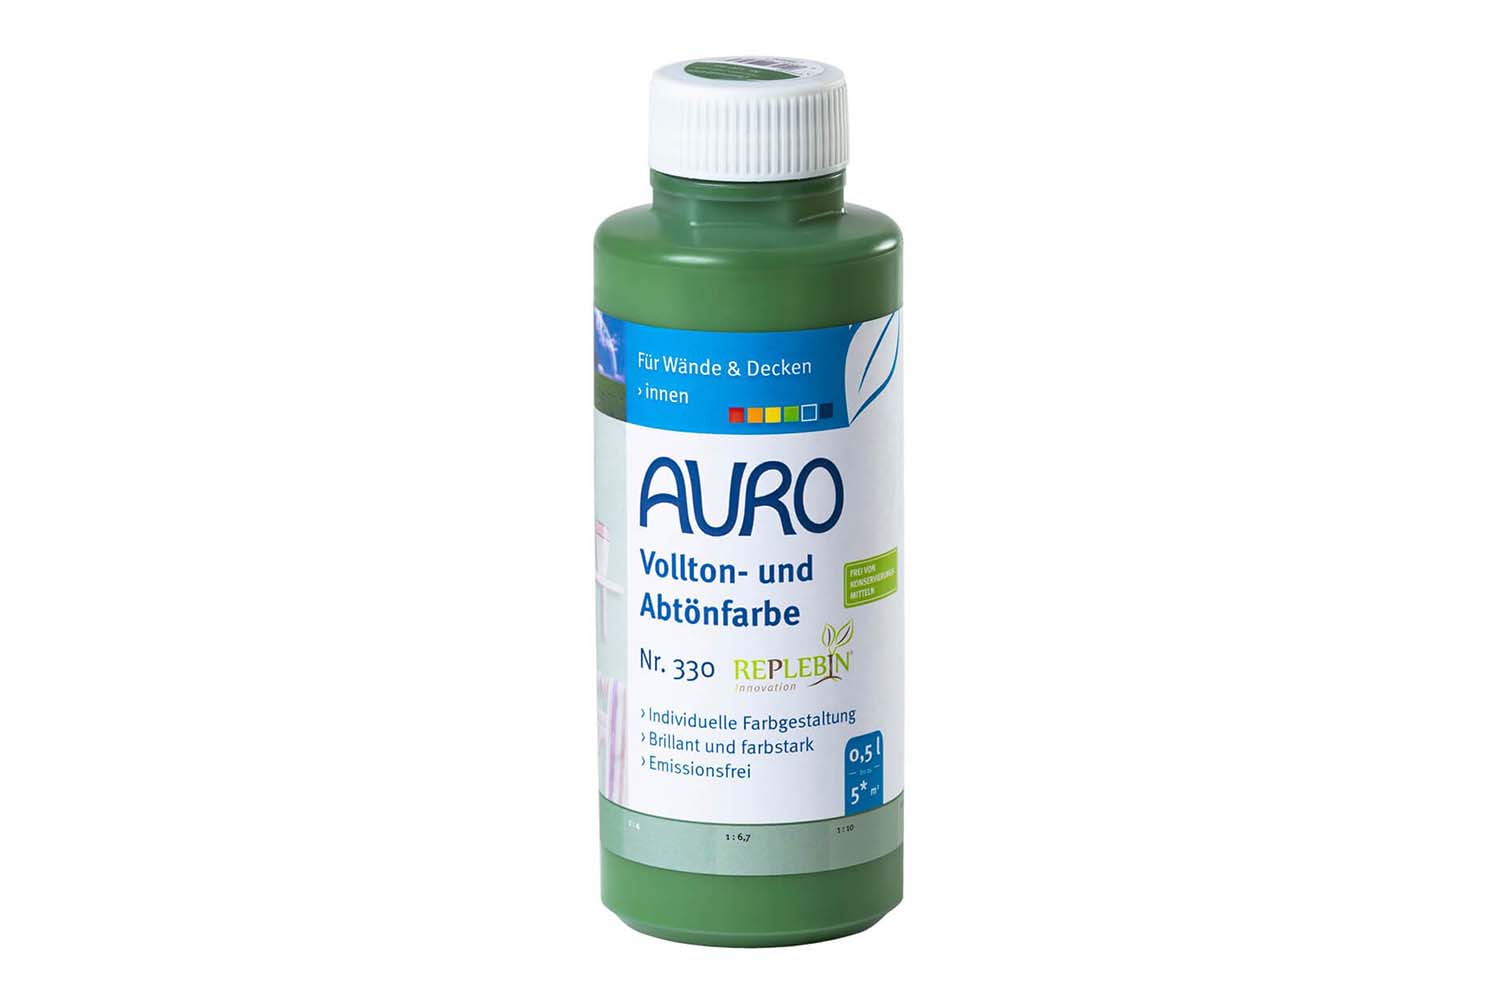 Auro Vollton- und Abtönfarbe Nr. 330 - Chromoxid-Grün